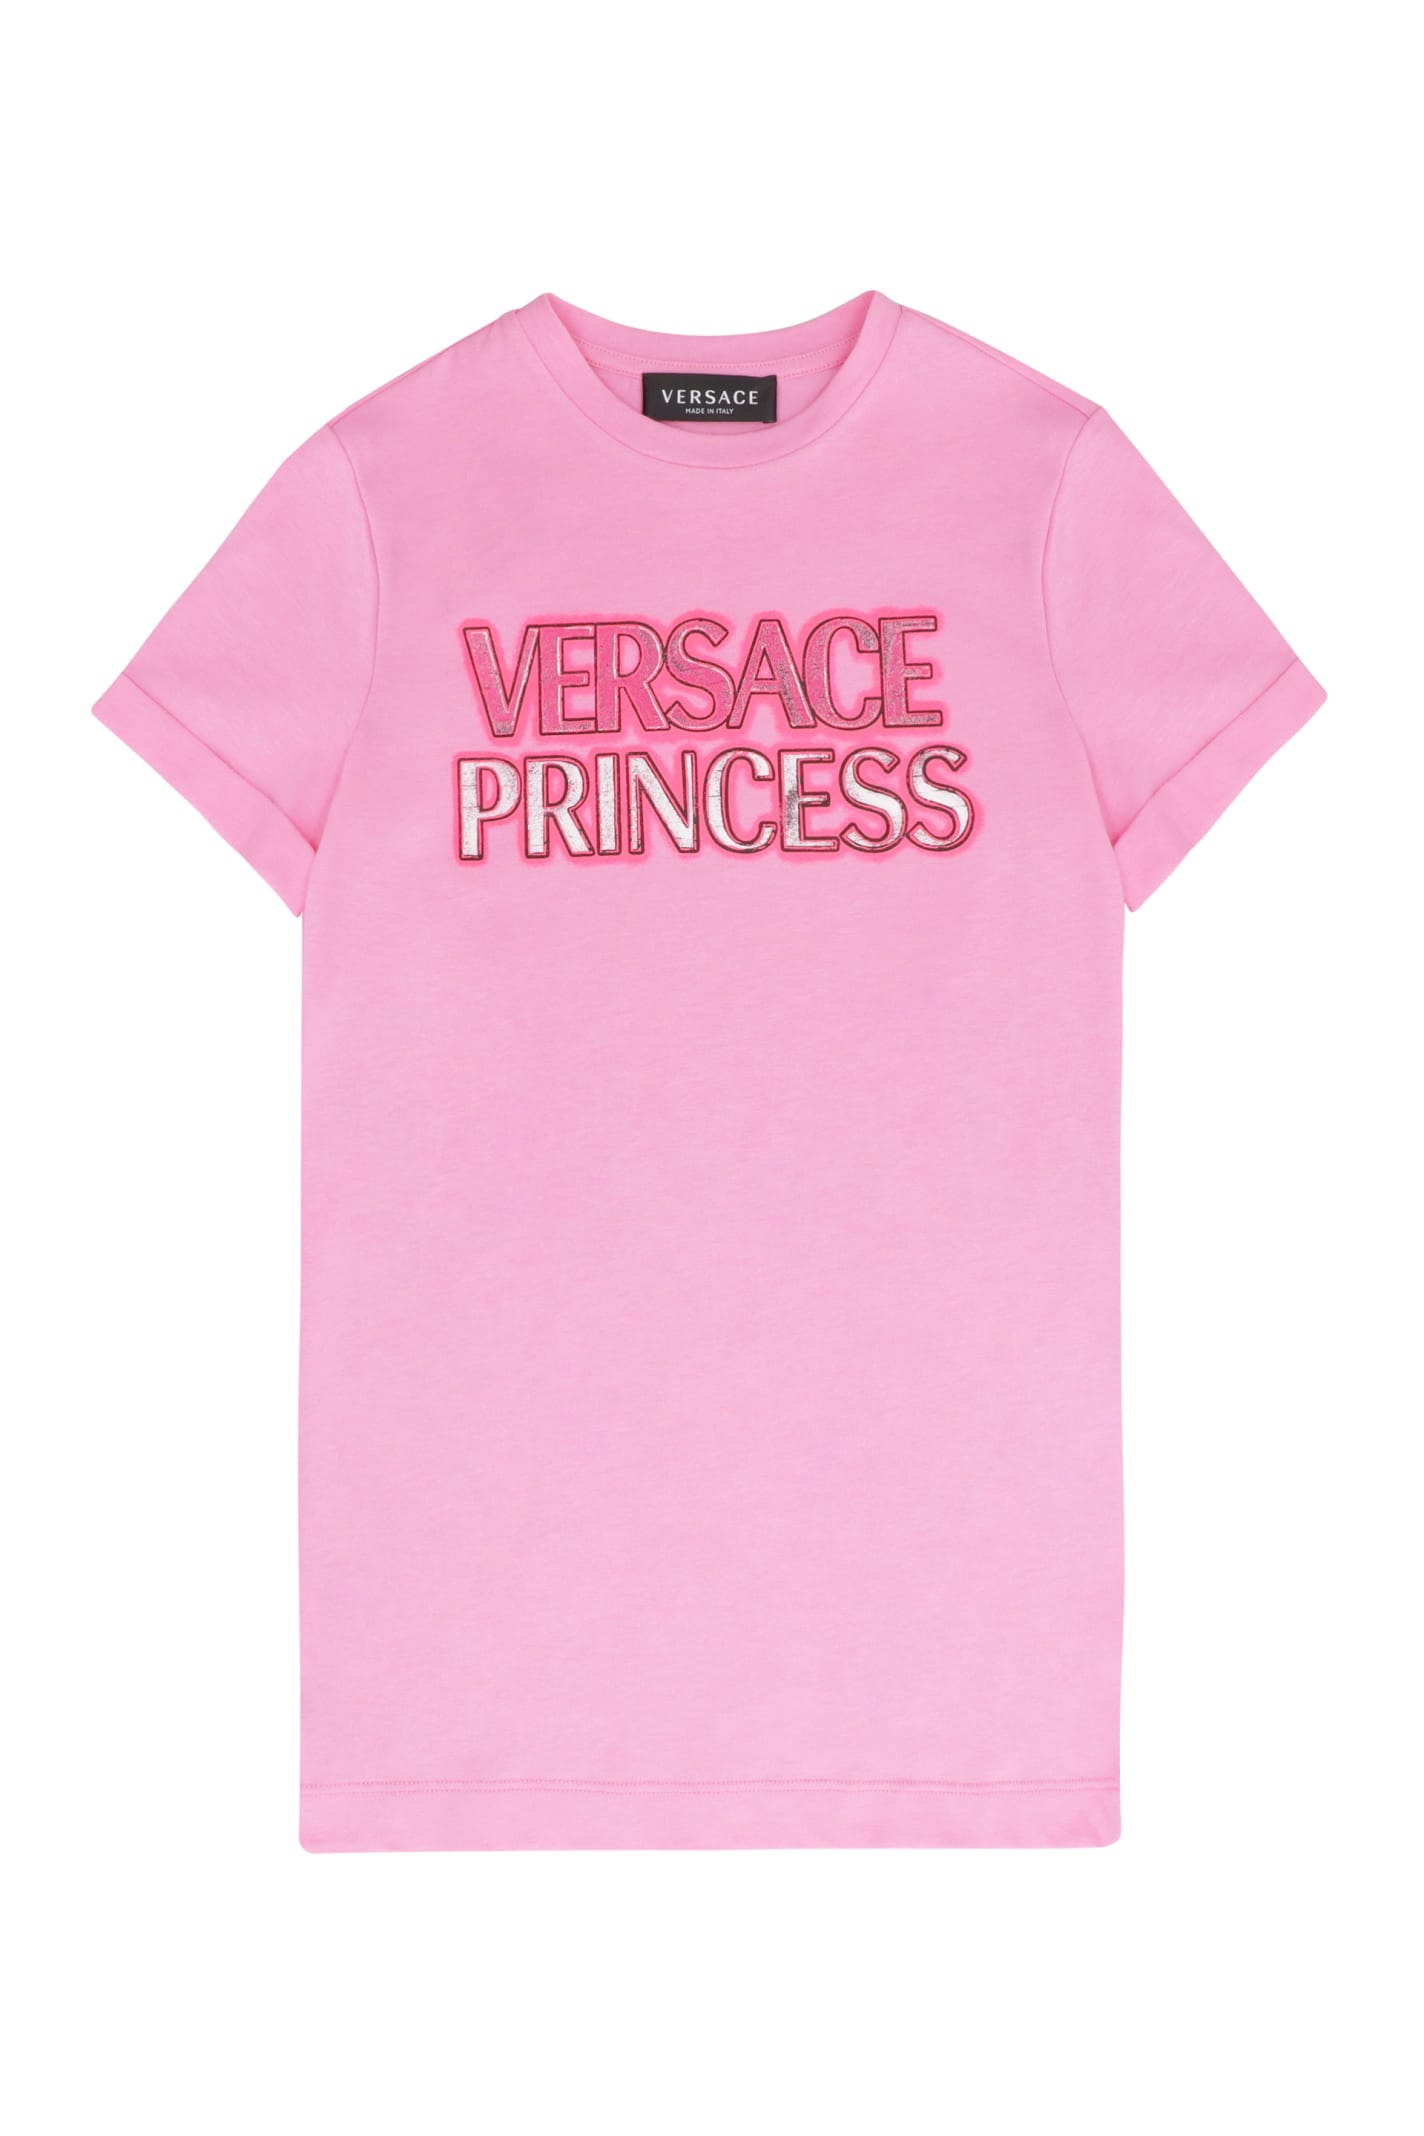 Young Versace Kids' Princess Print T-shirt Dress In Fuchsia